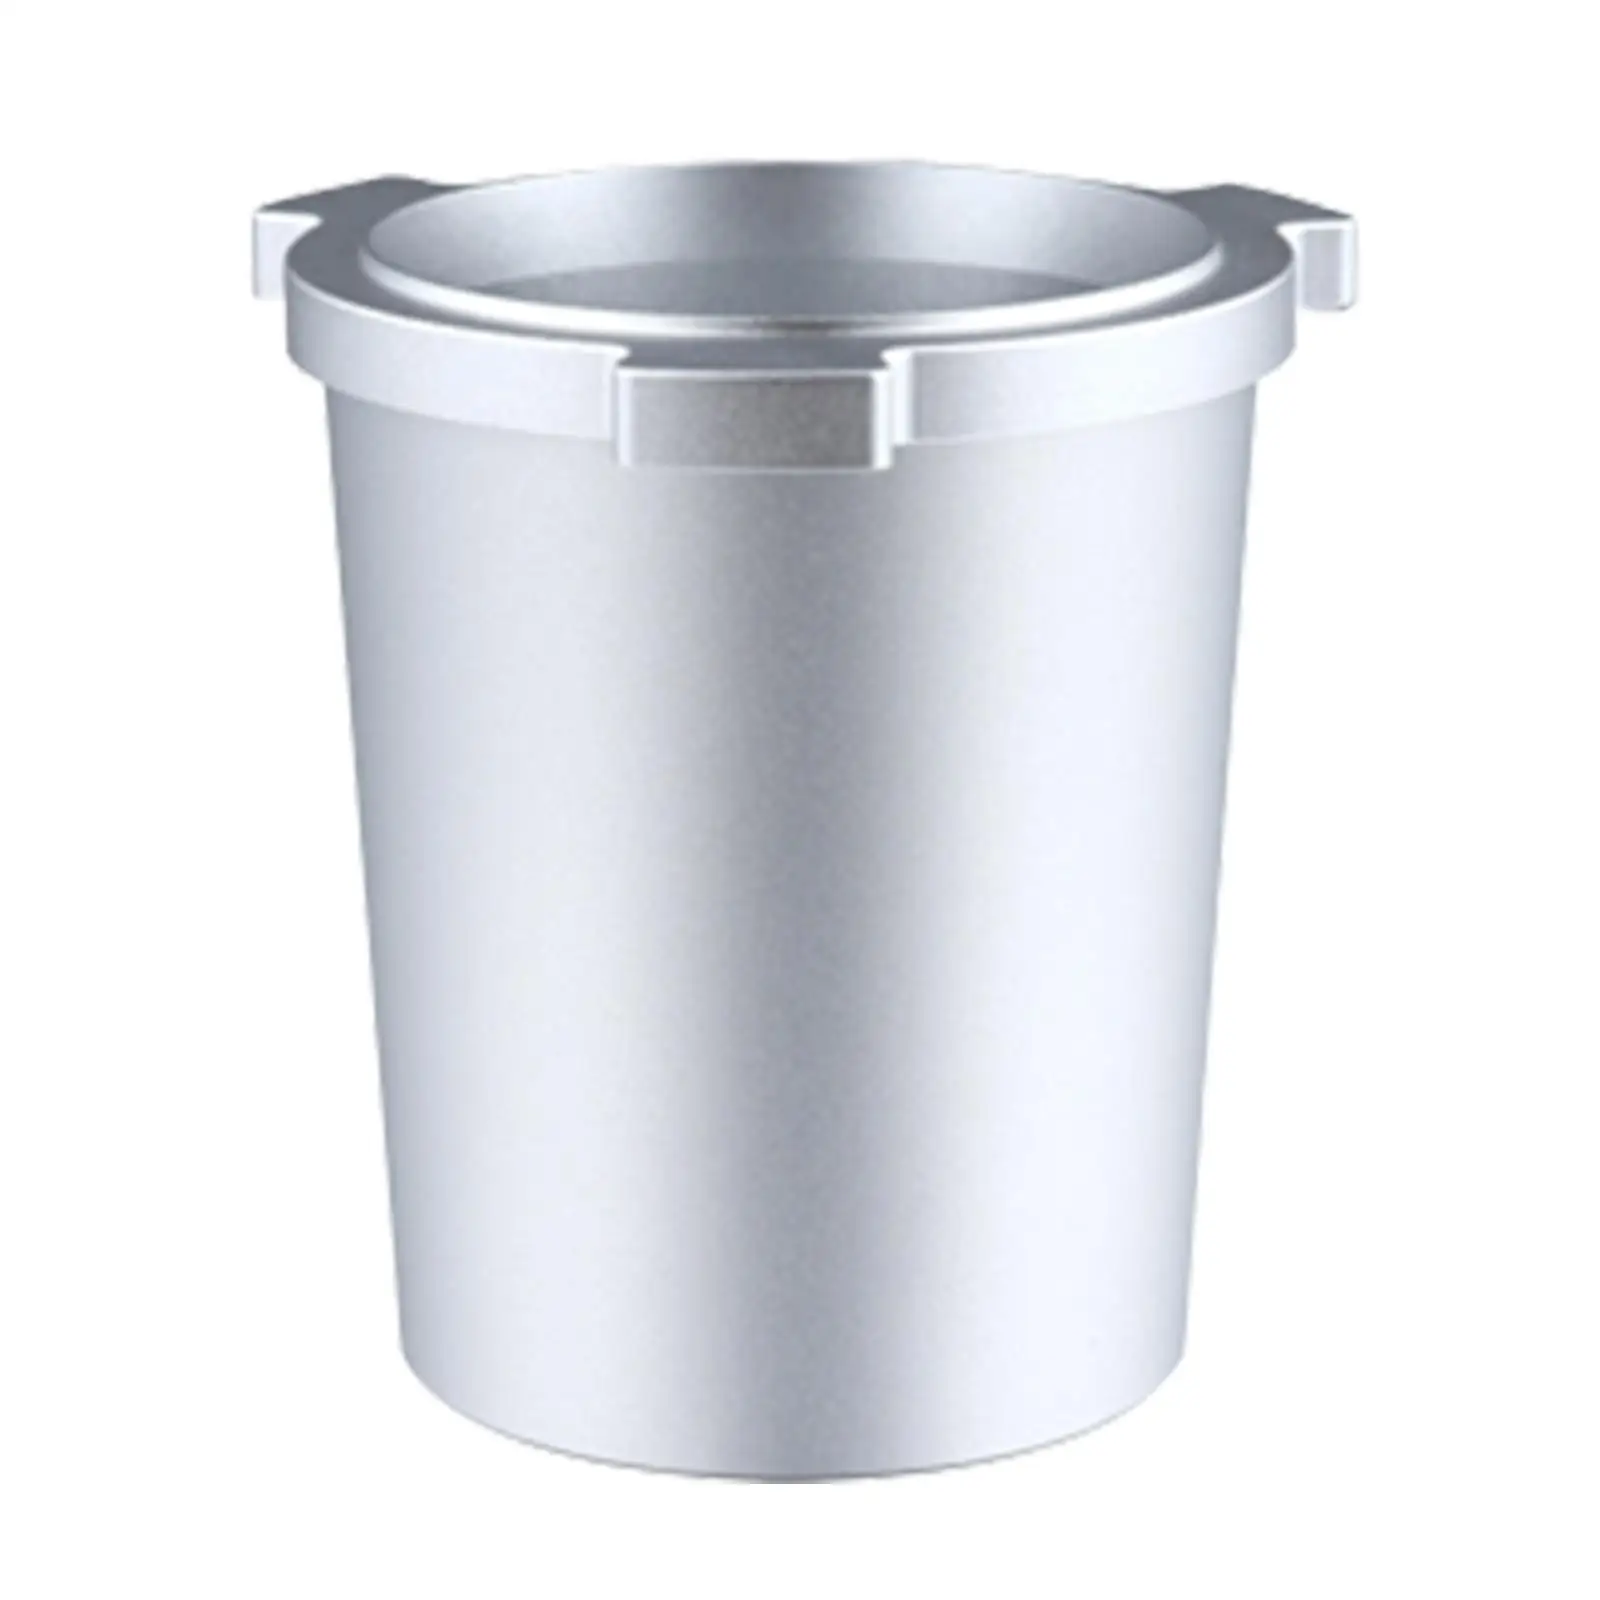 51mm Coffee Dosing Cup Durable Necessary Tool Coffee Machine Cup Binaural Design